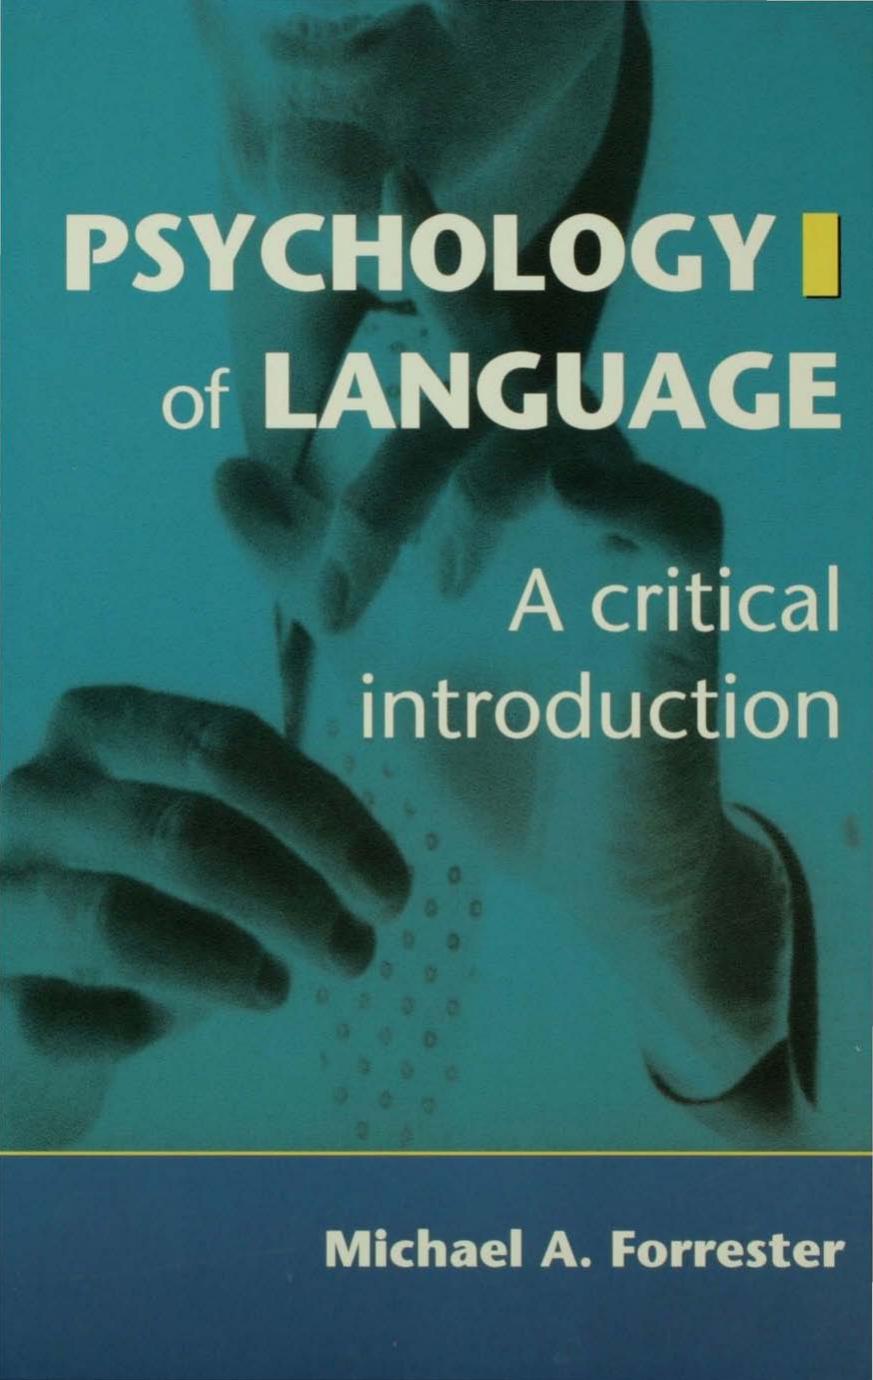 Psychology of Language: A Critical Introduction